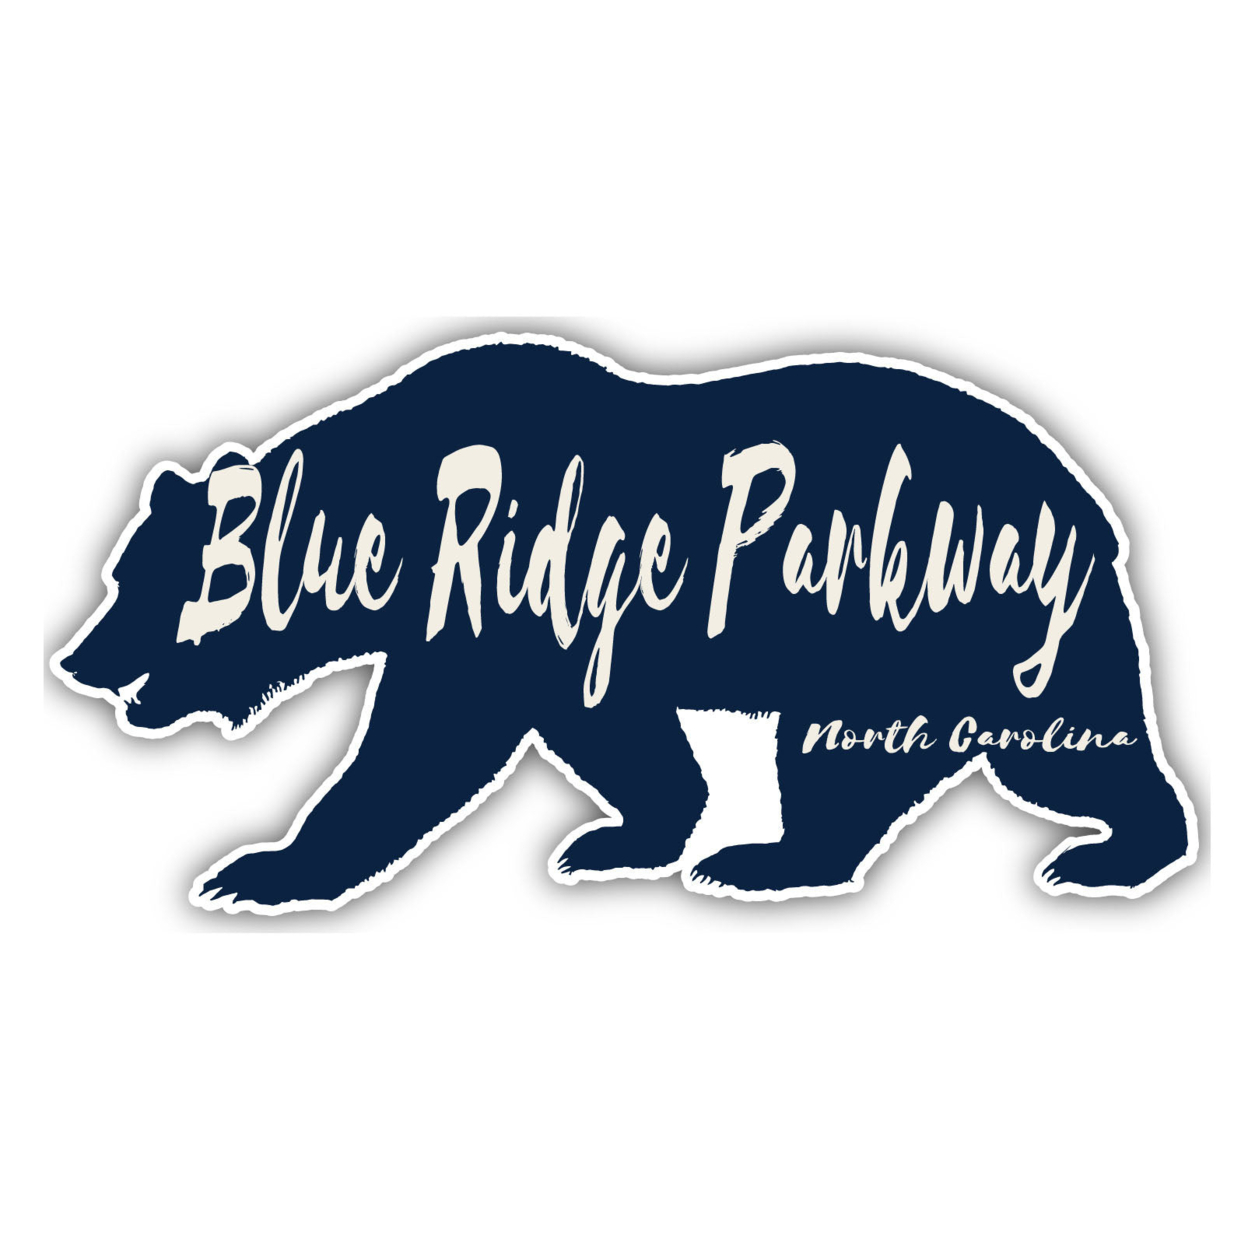 Blue Ridge Parkway North Carolina Souvenir Decorative Stickers (Choose Theme And Size) - Single Unit, 8-Inch, Bear